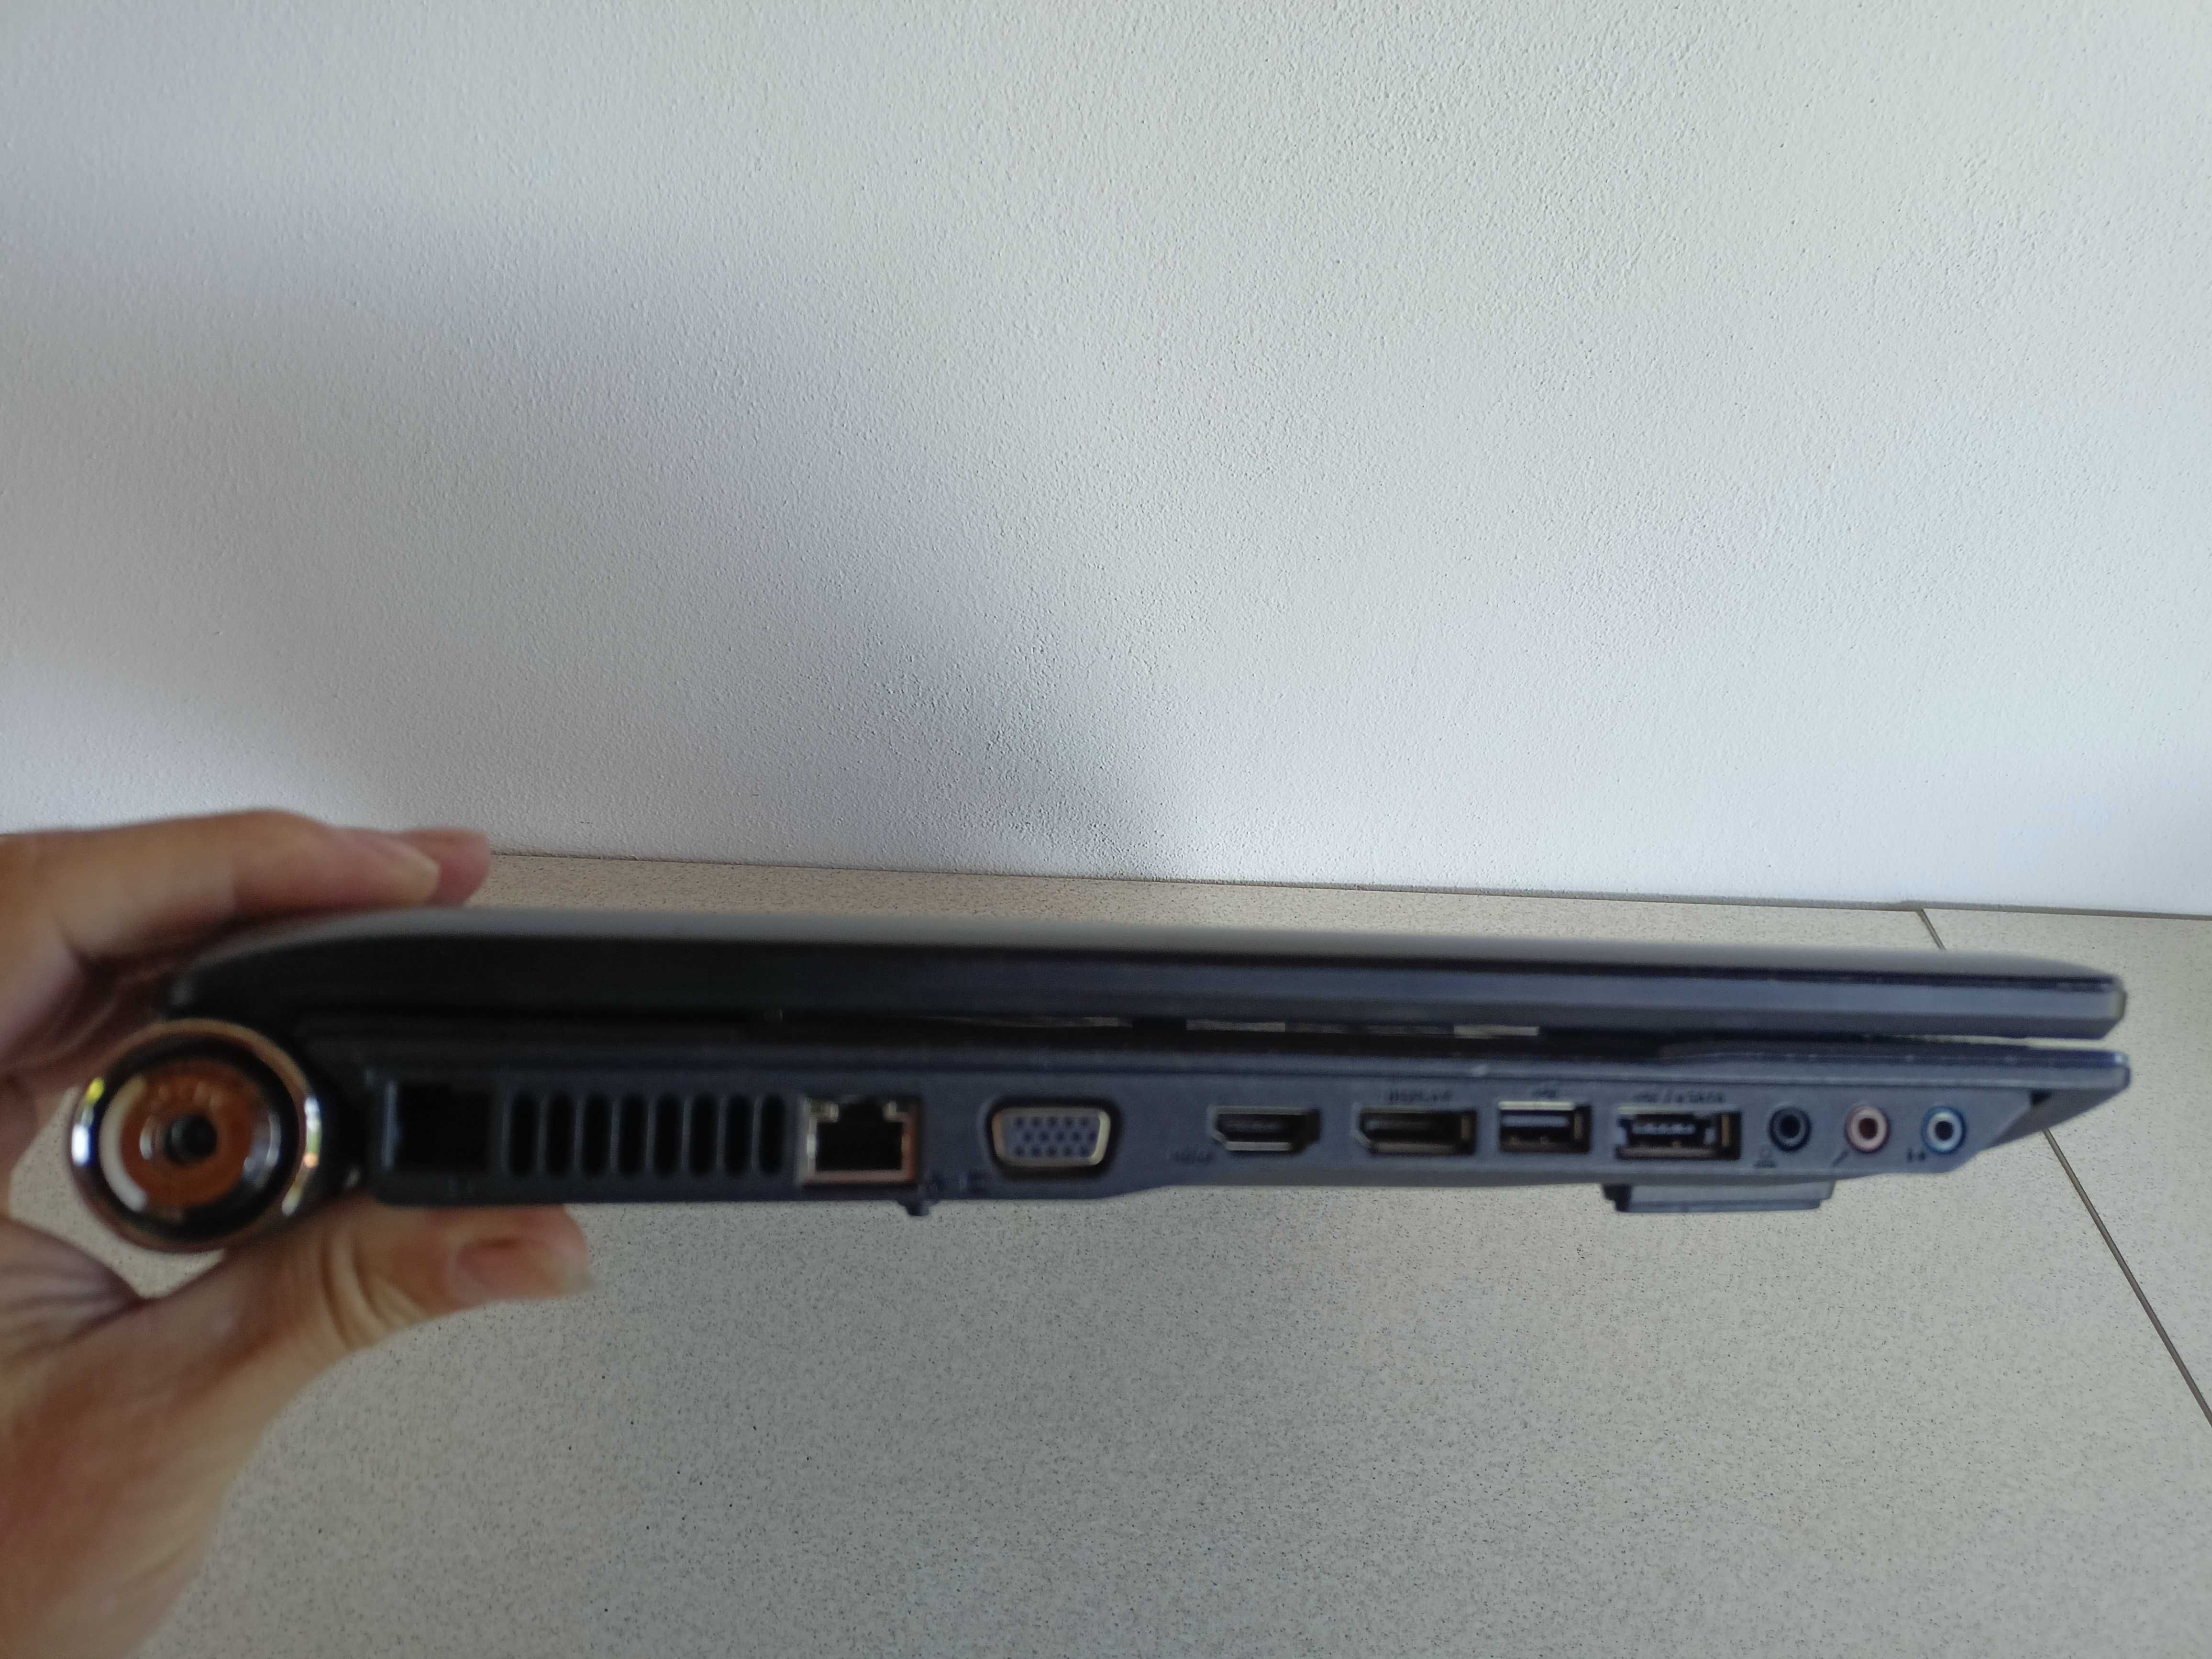 Laptop Acer 8930 display 18,4 ram 4ddr3 Proc T6500 Nvidia 9600m (1gb)